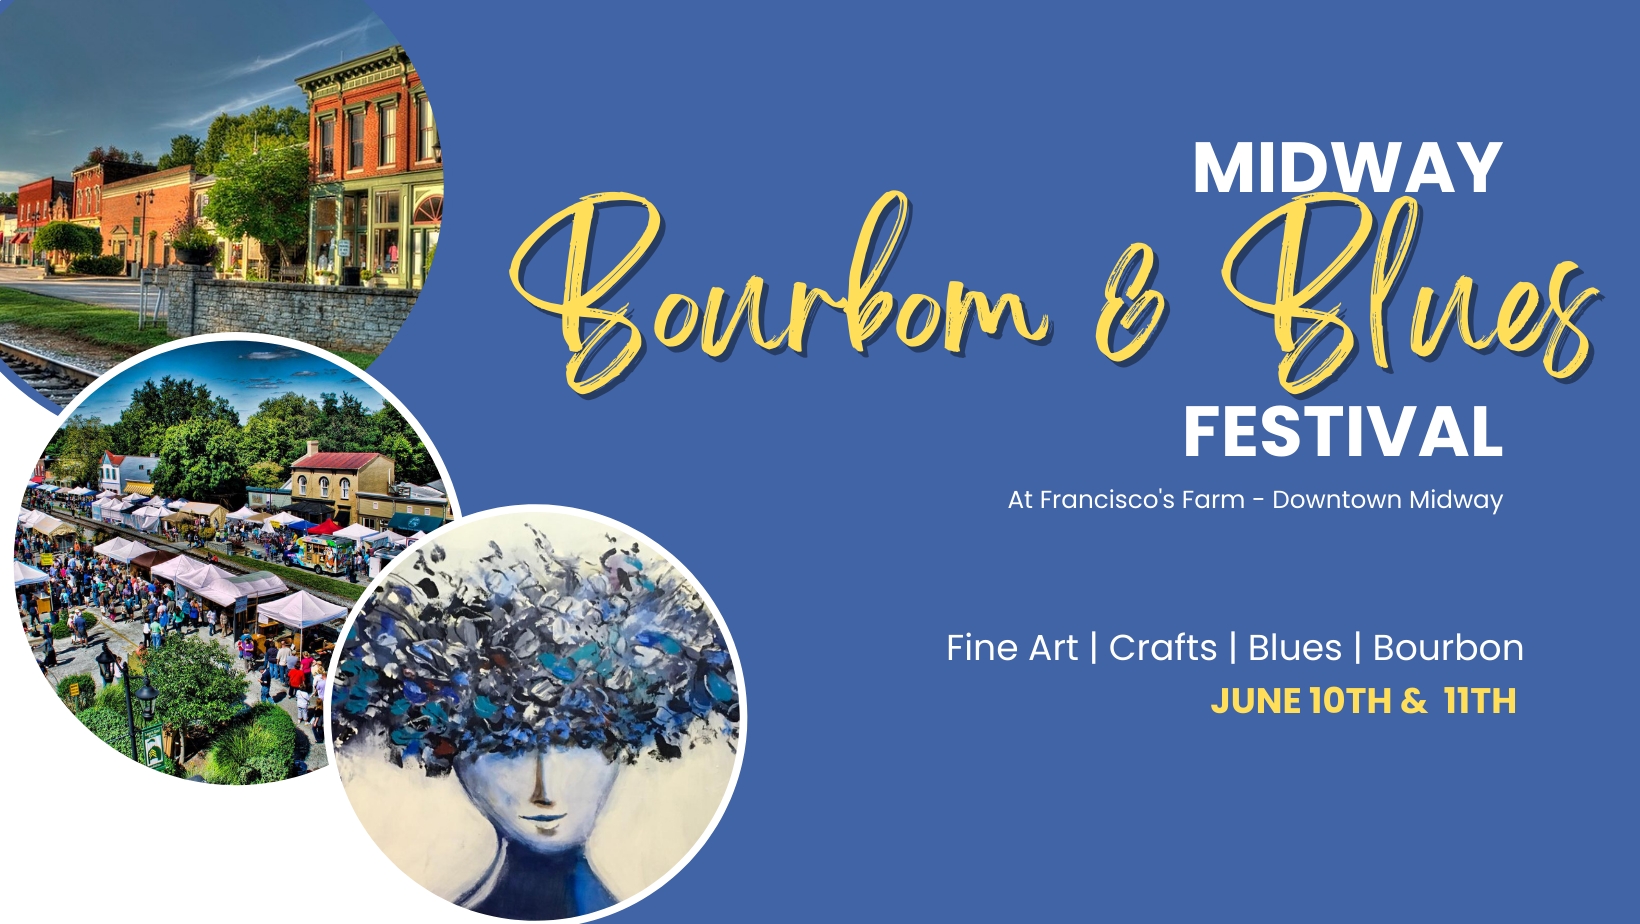 Midway Bourbon & Blues Festival cover image